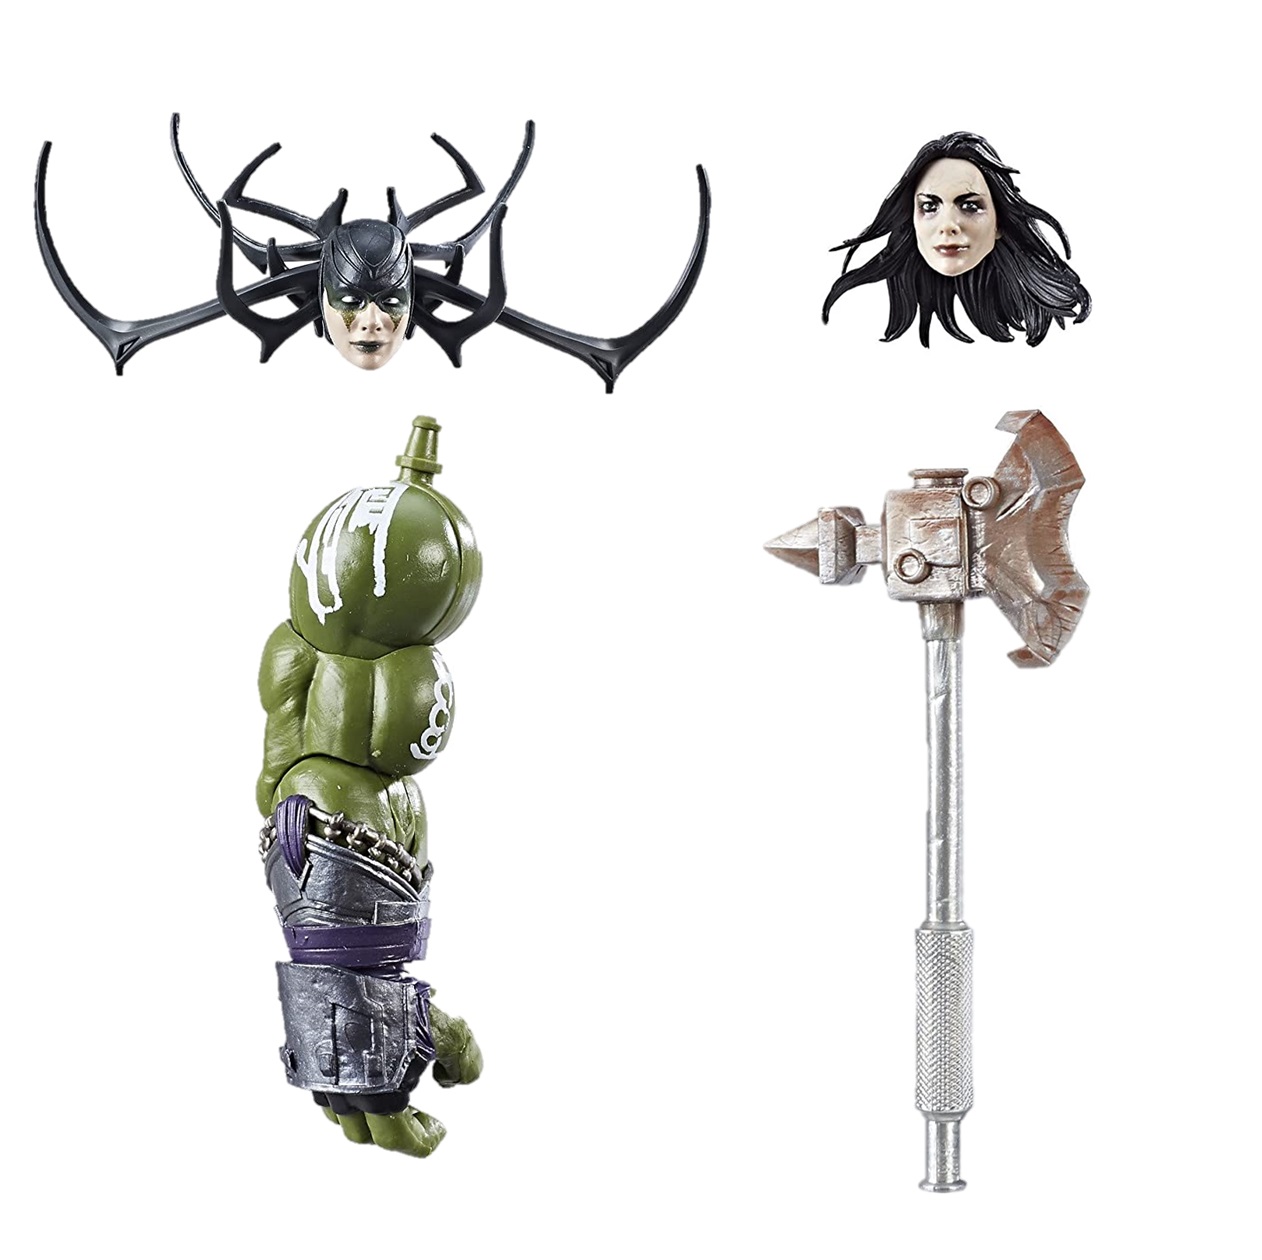 Hela Figura Marvel Thor Ragnarok B A F Hulk Legends Series